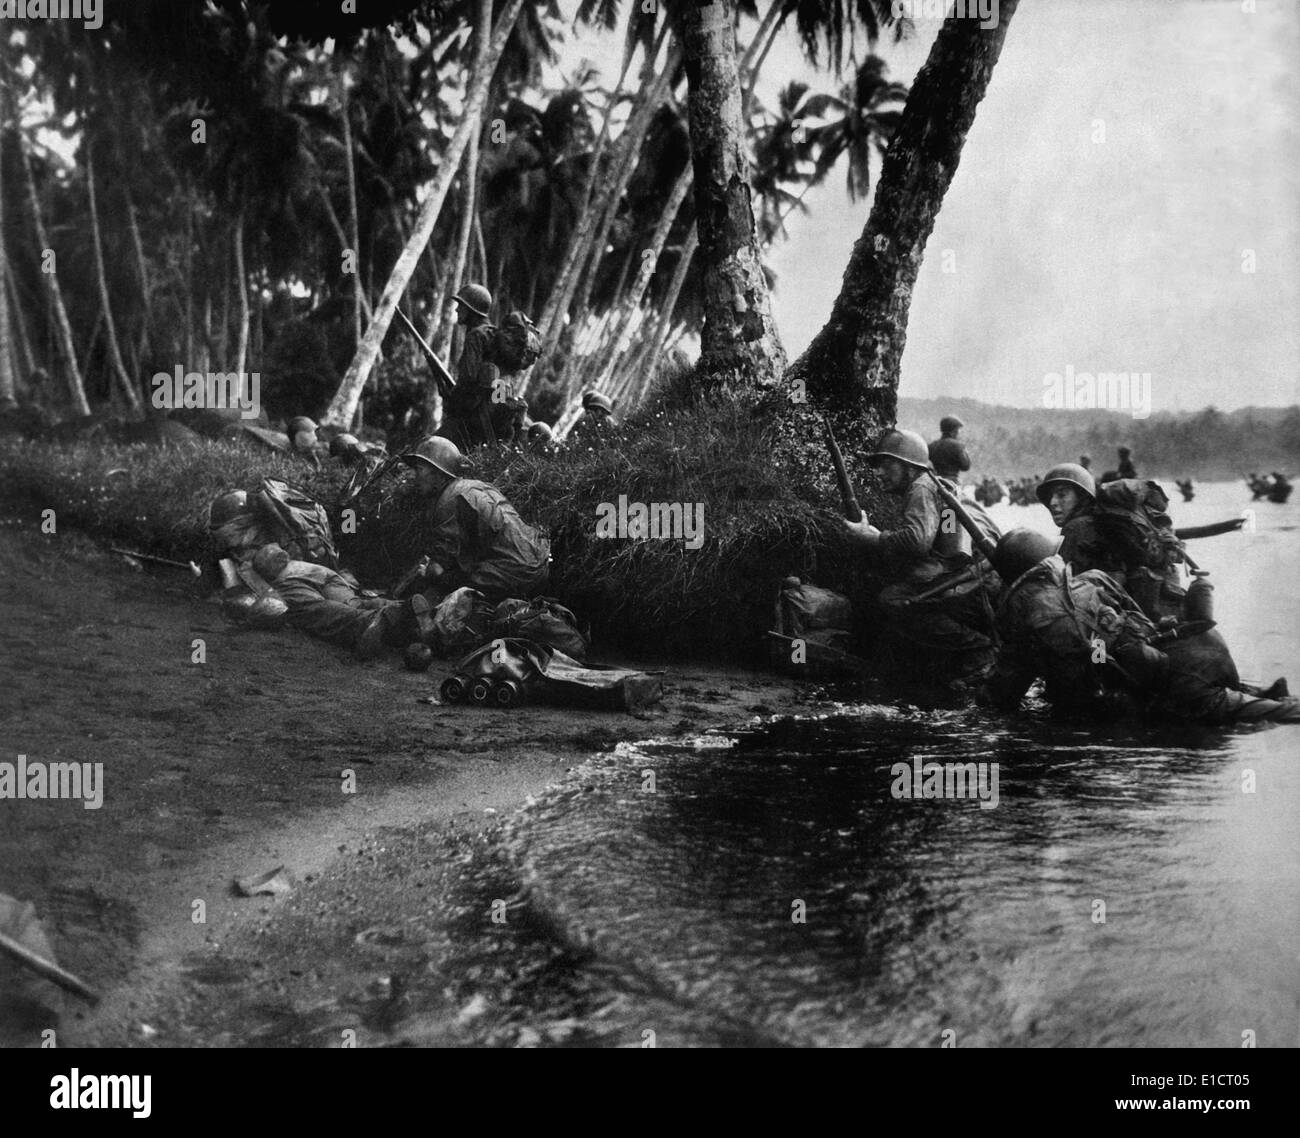 Page 14  Solomon Islands War Images - Free Download on Freepik